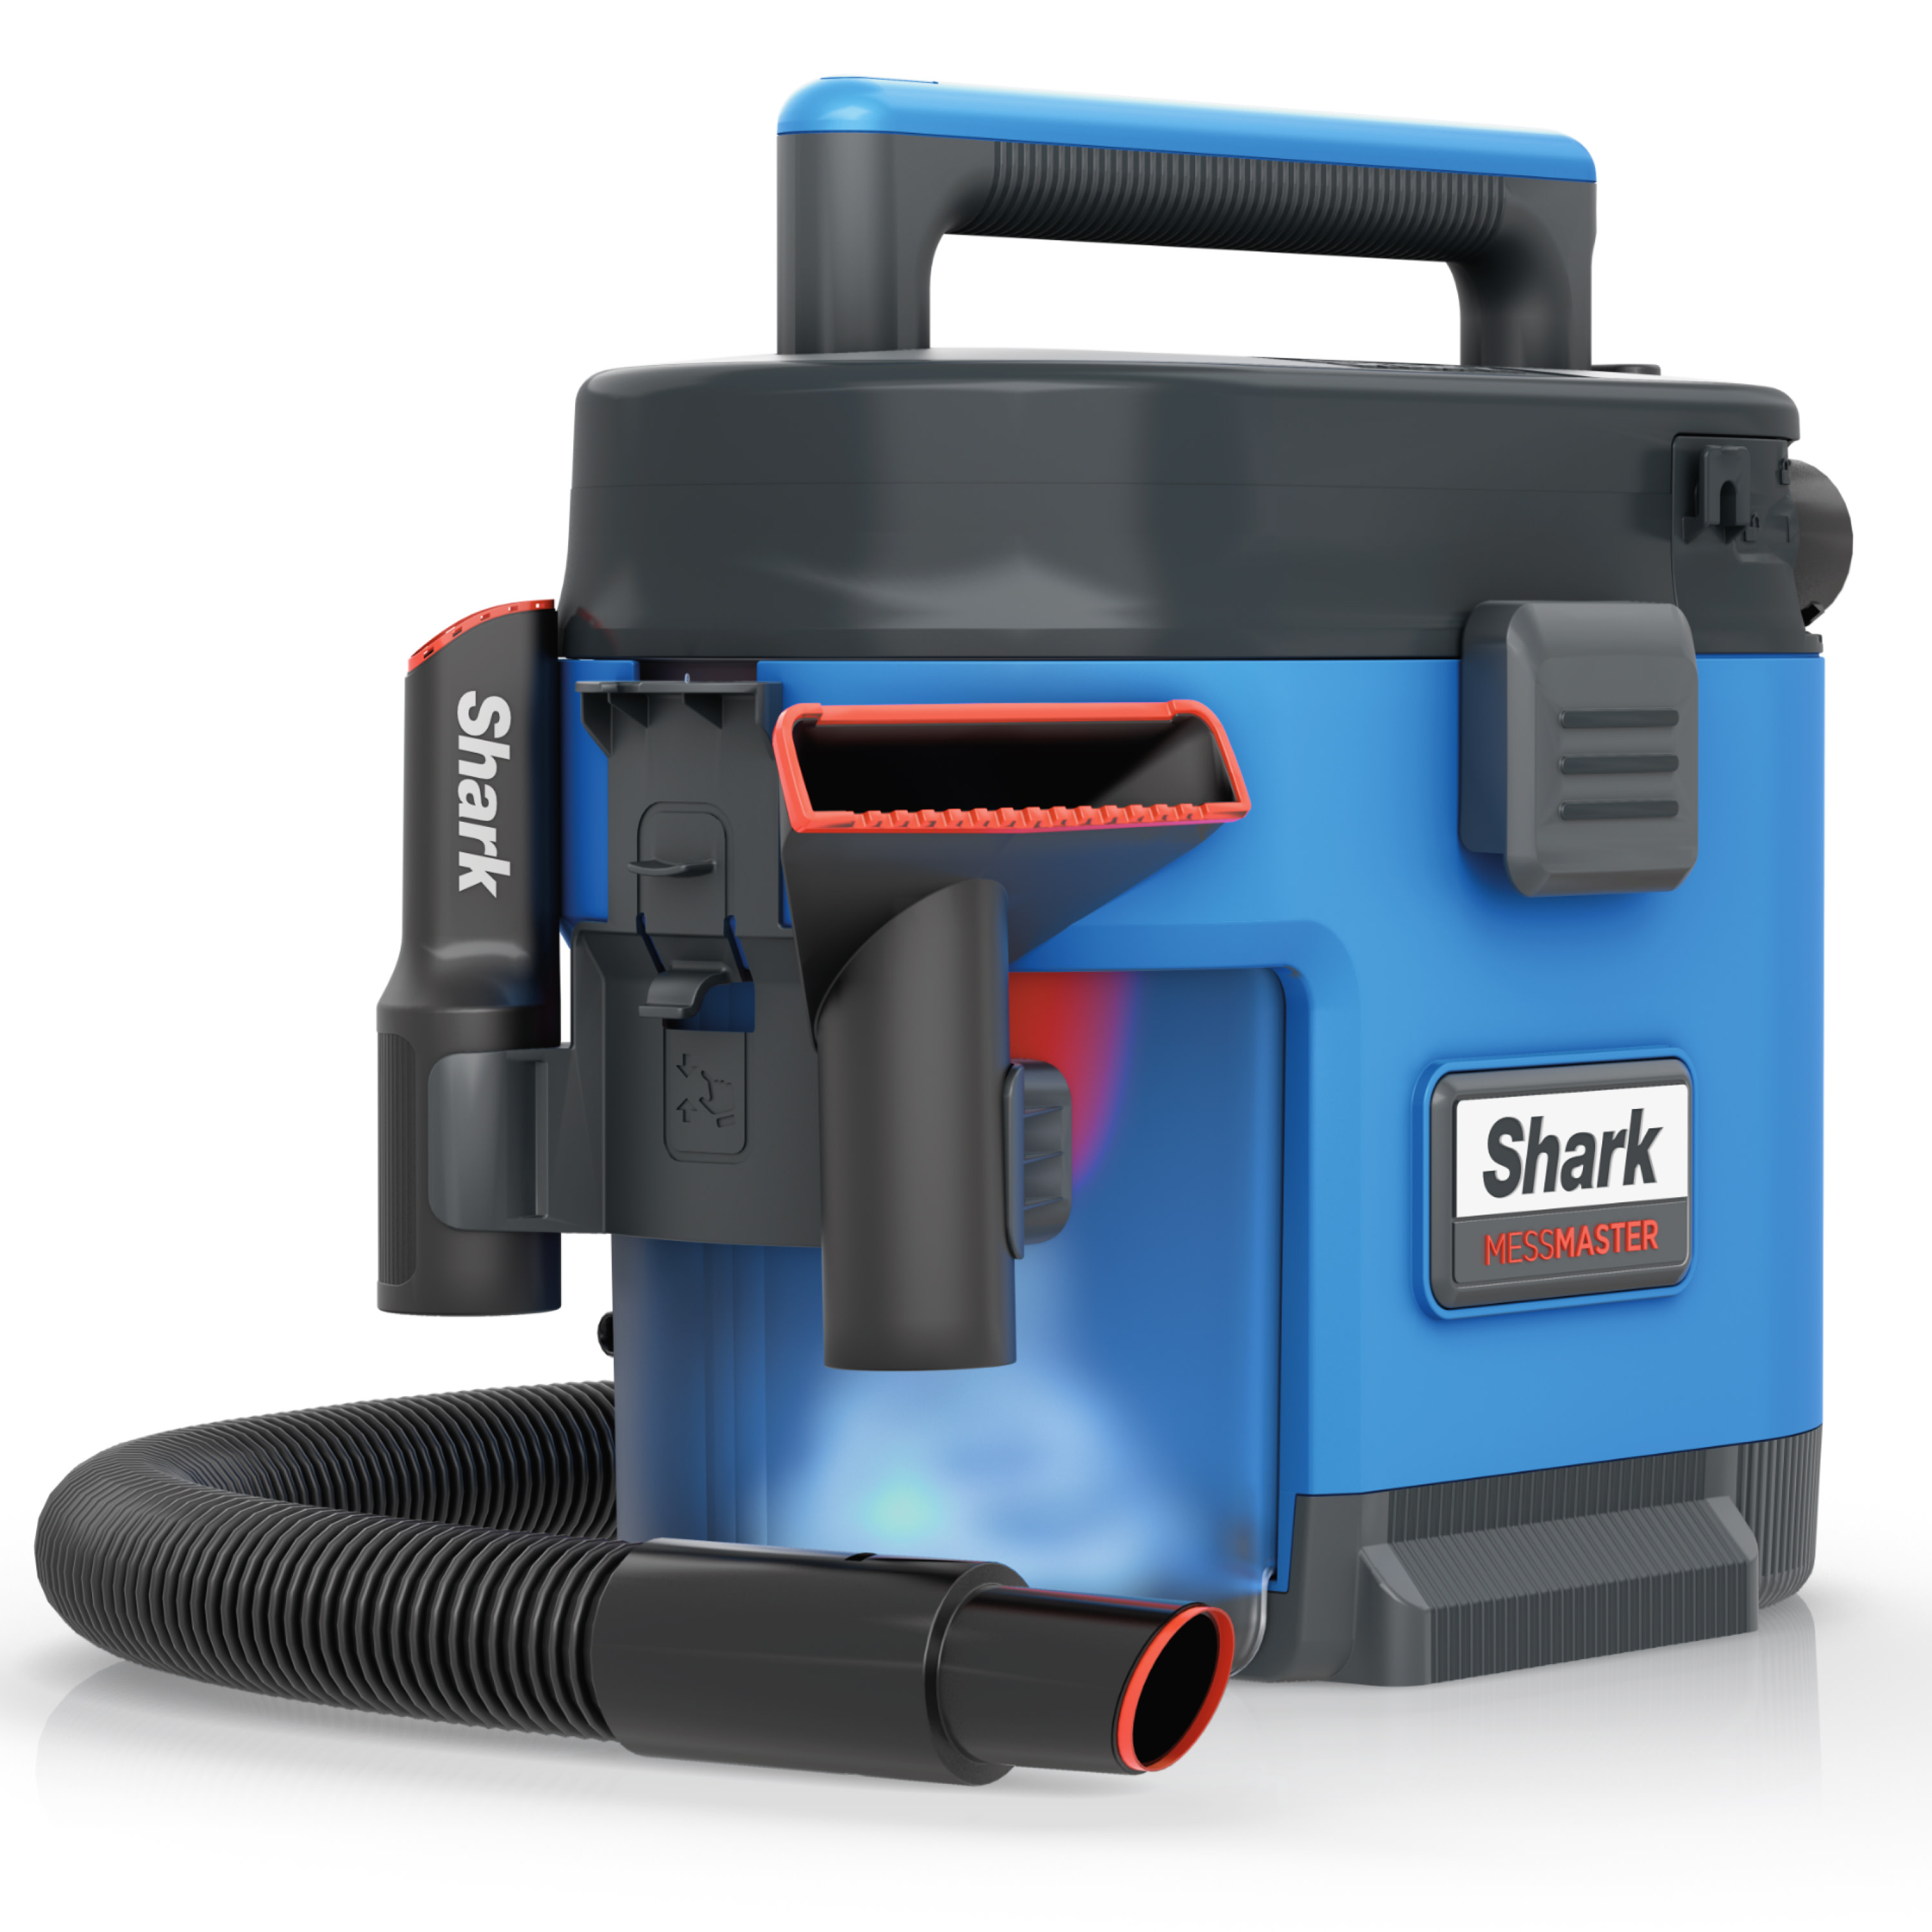 Shark MessMaster Portable Wet Dry Vacuum, Small Shop Vac, 1 Gallon Capacity, Corded, Handheld, VS100 - image 1 of 12